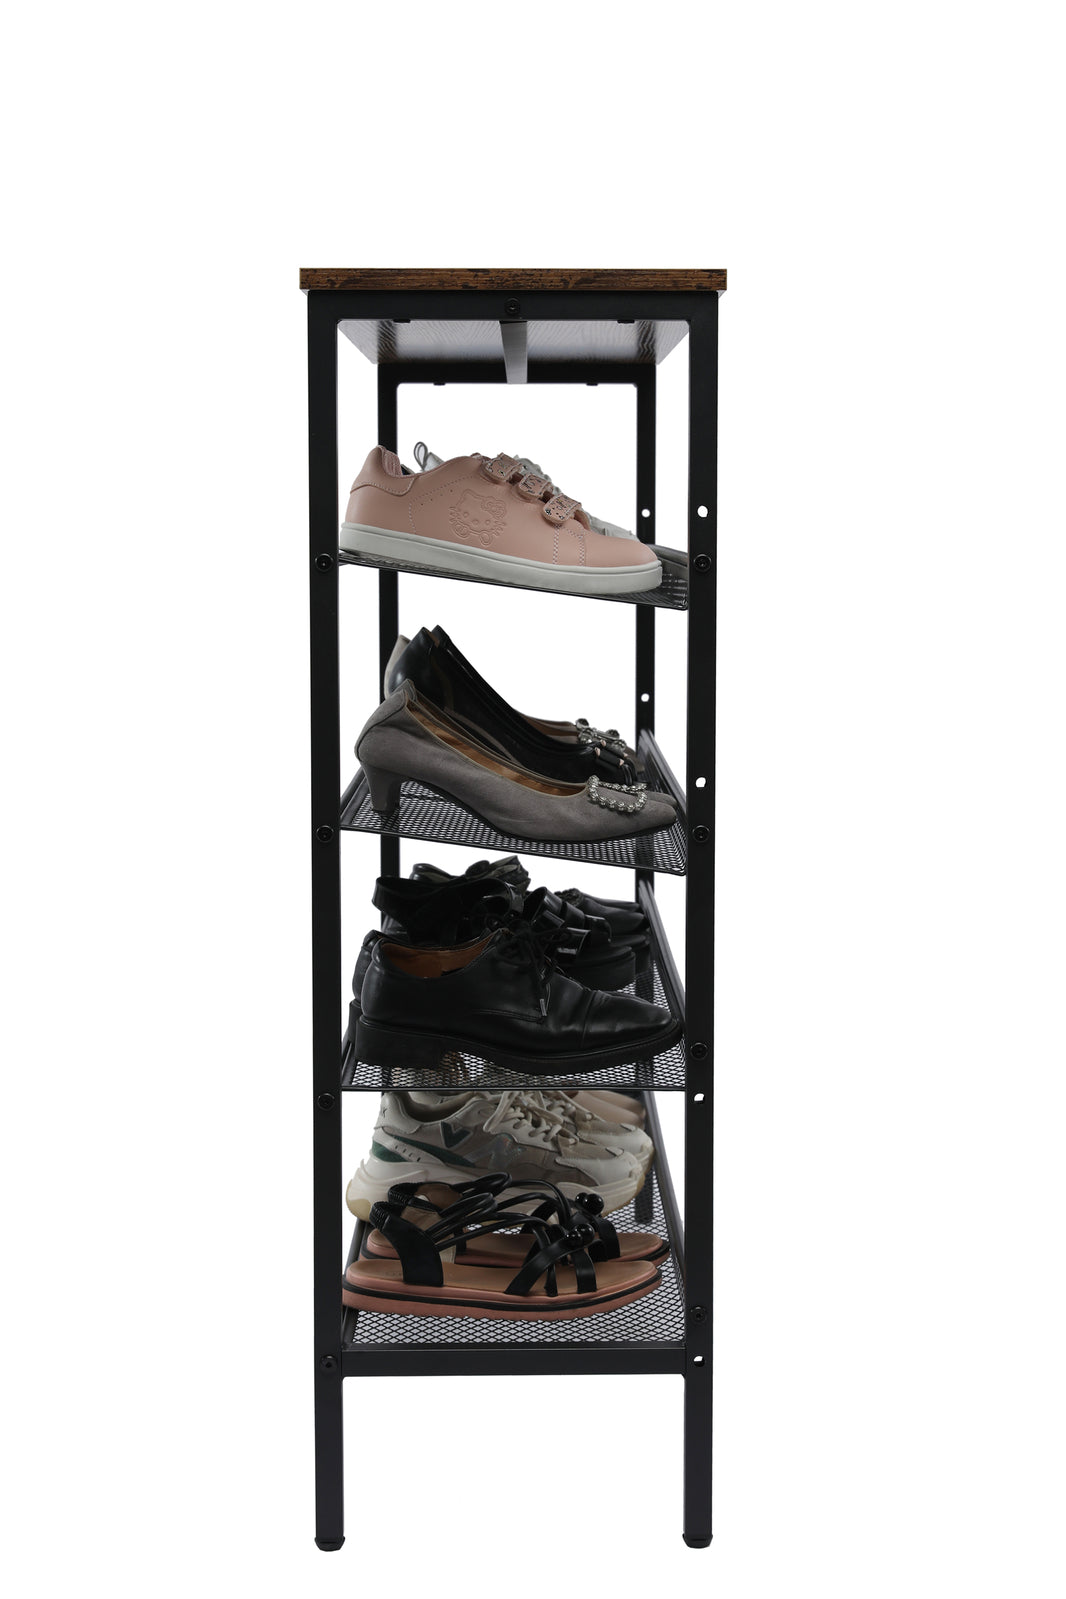 YES4HOMES 5-Tier Medium Shoe Rack Shelf Stand Flat & Slant Adjustable Storage Organizer